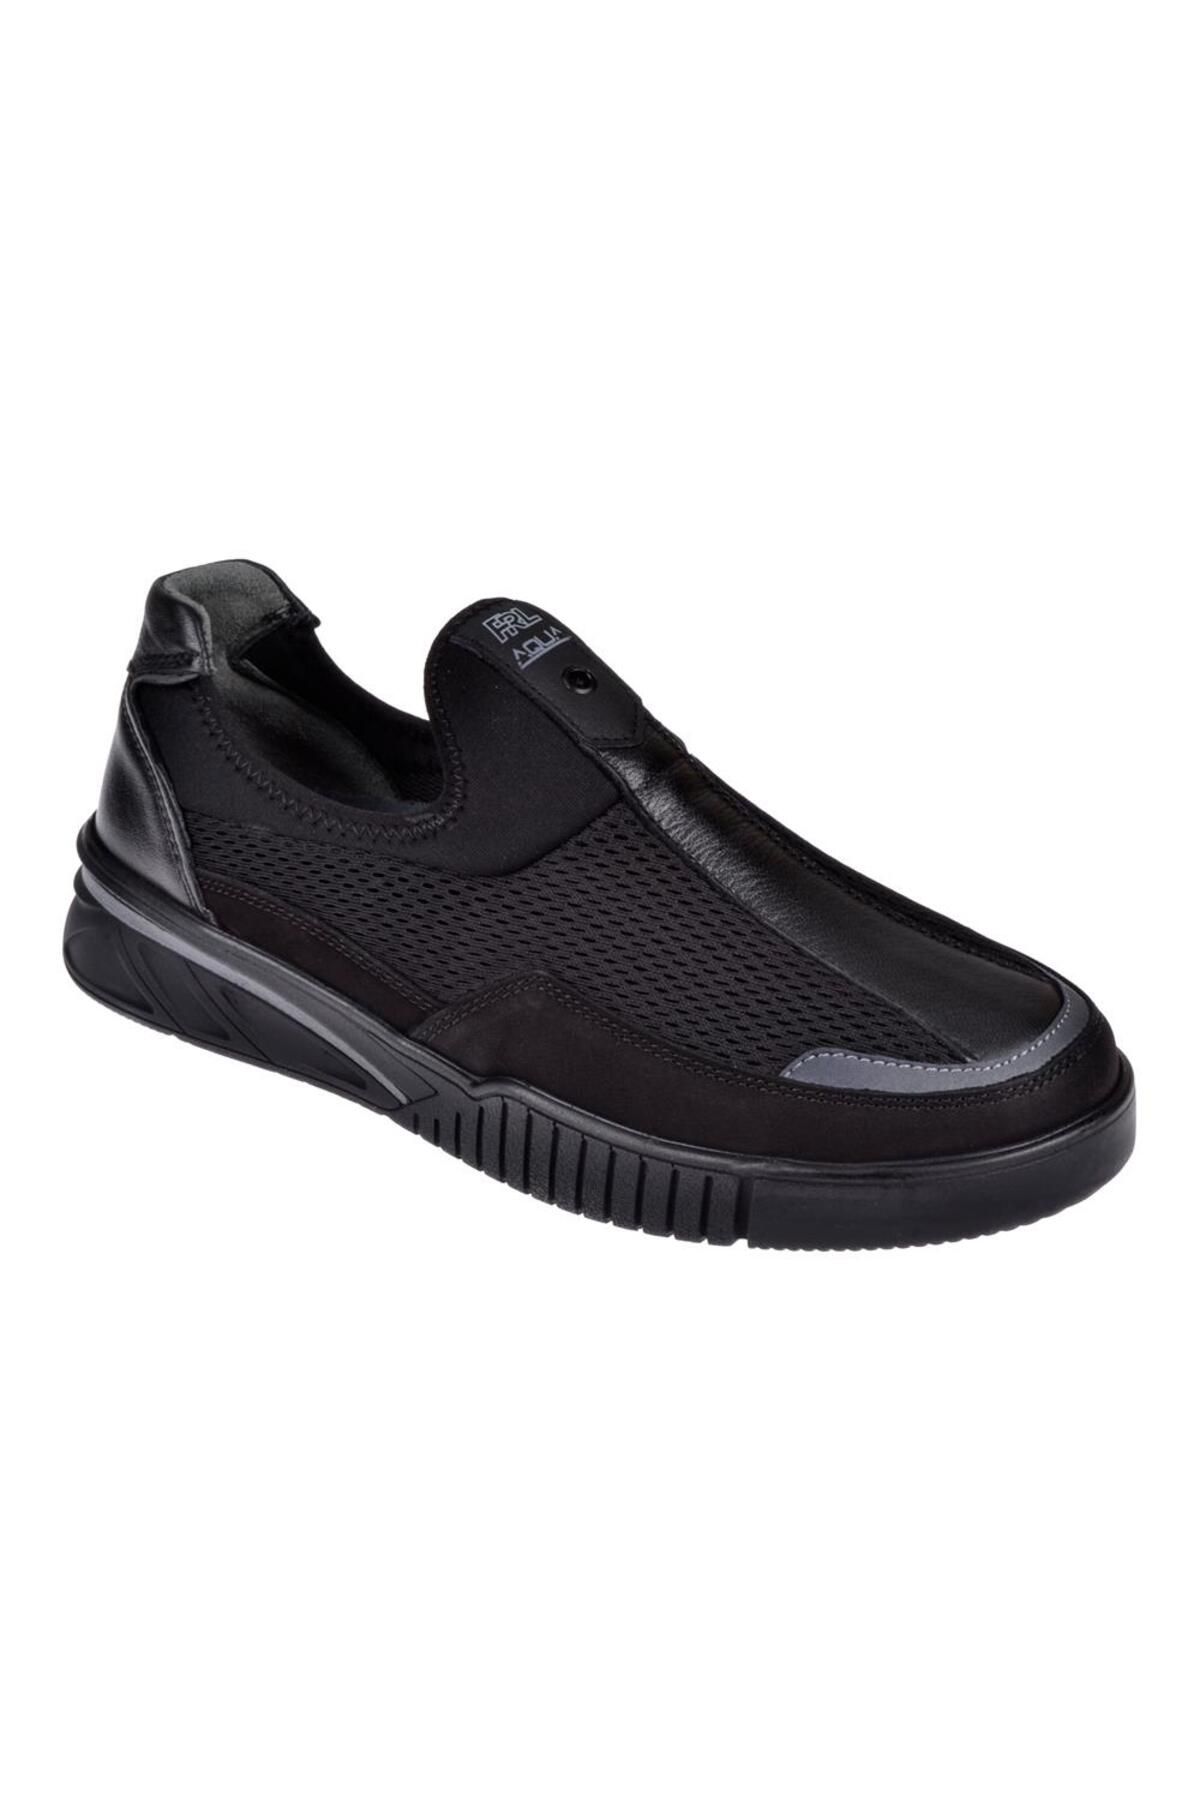 Forelli Comfort Erkek Spor Ayakkabı Sneaker For-aqua Siyah